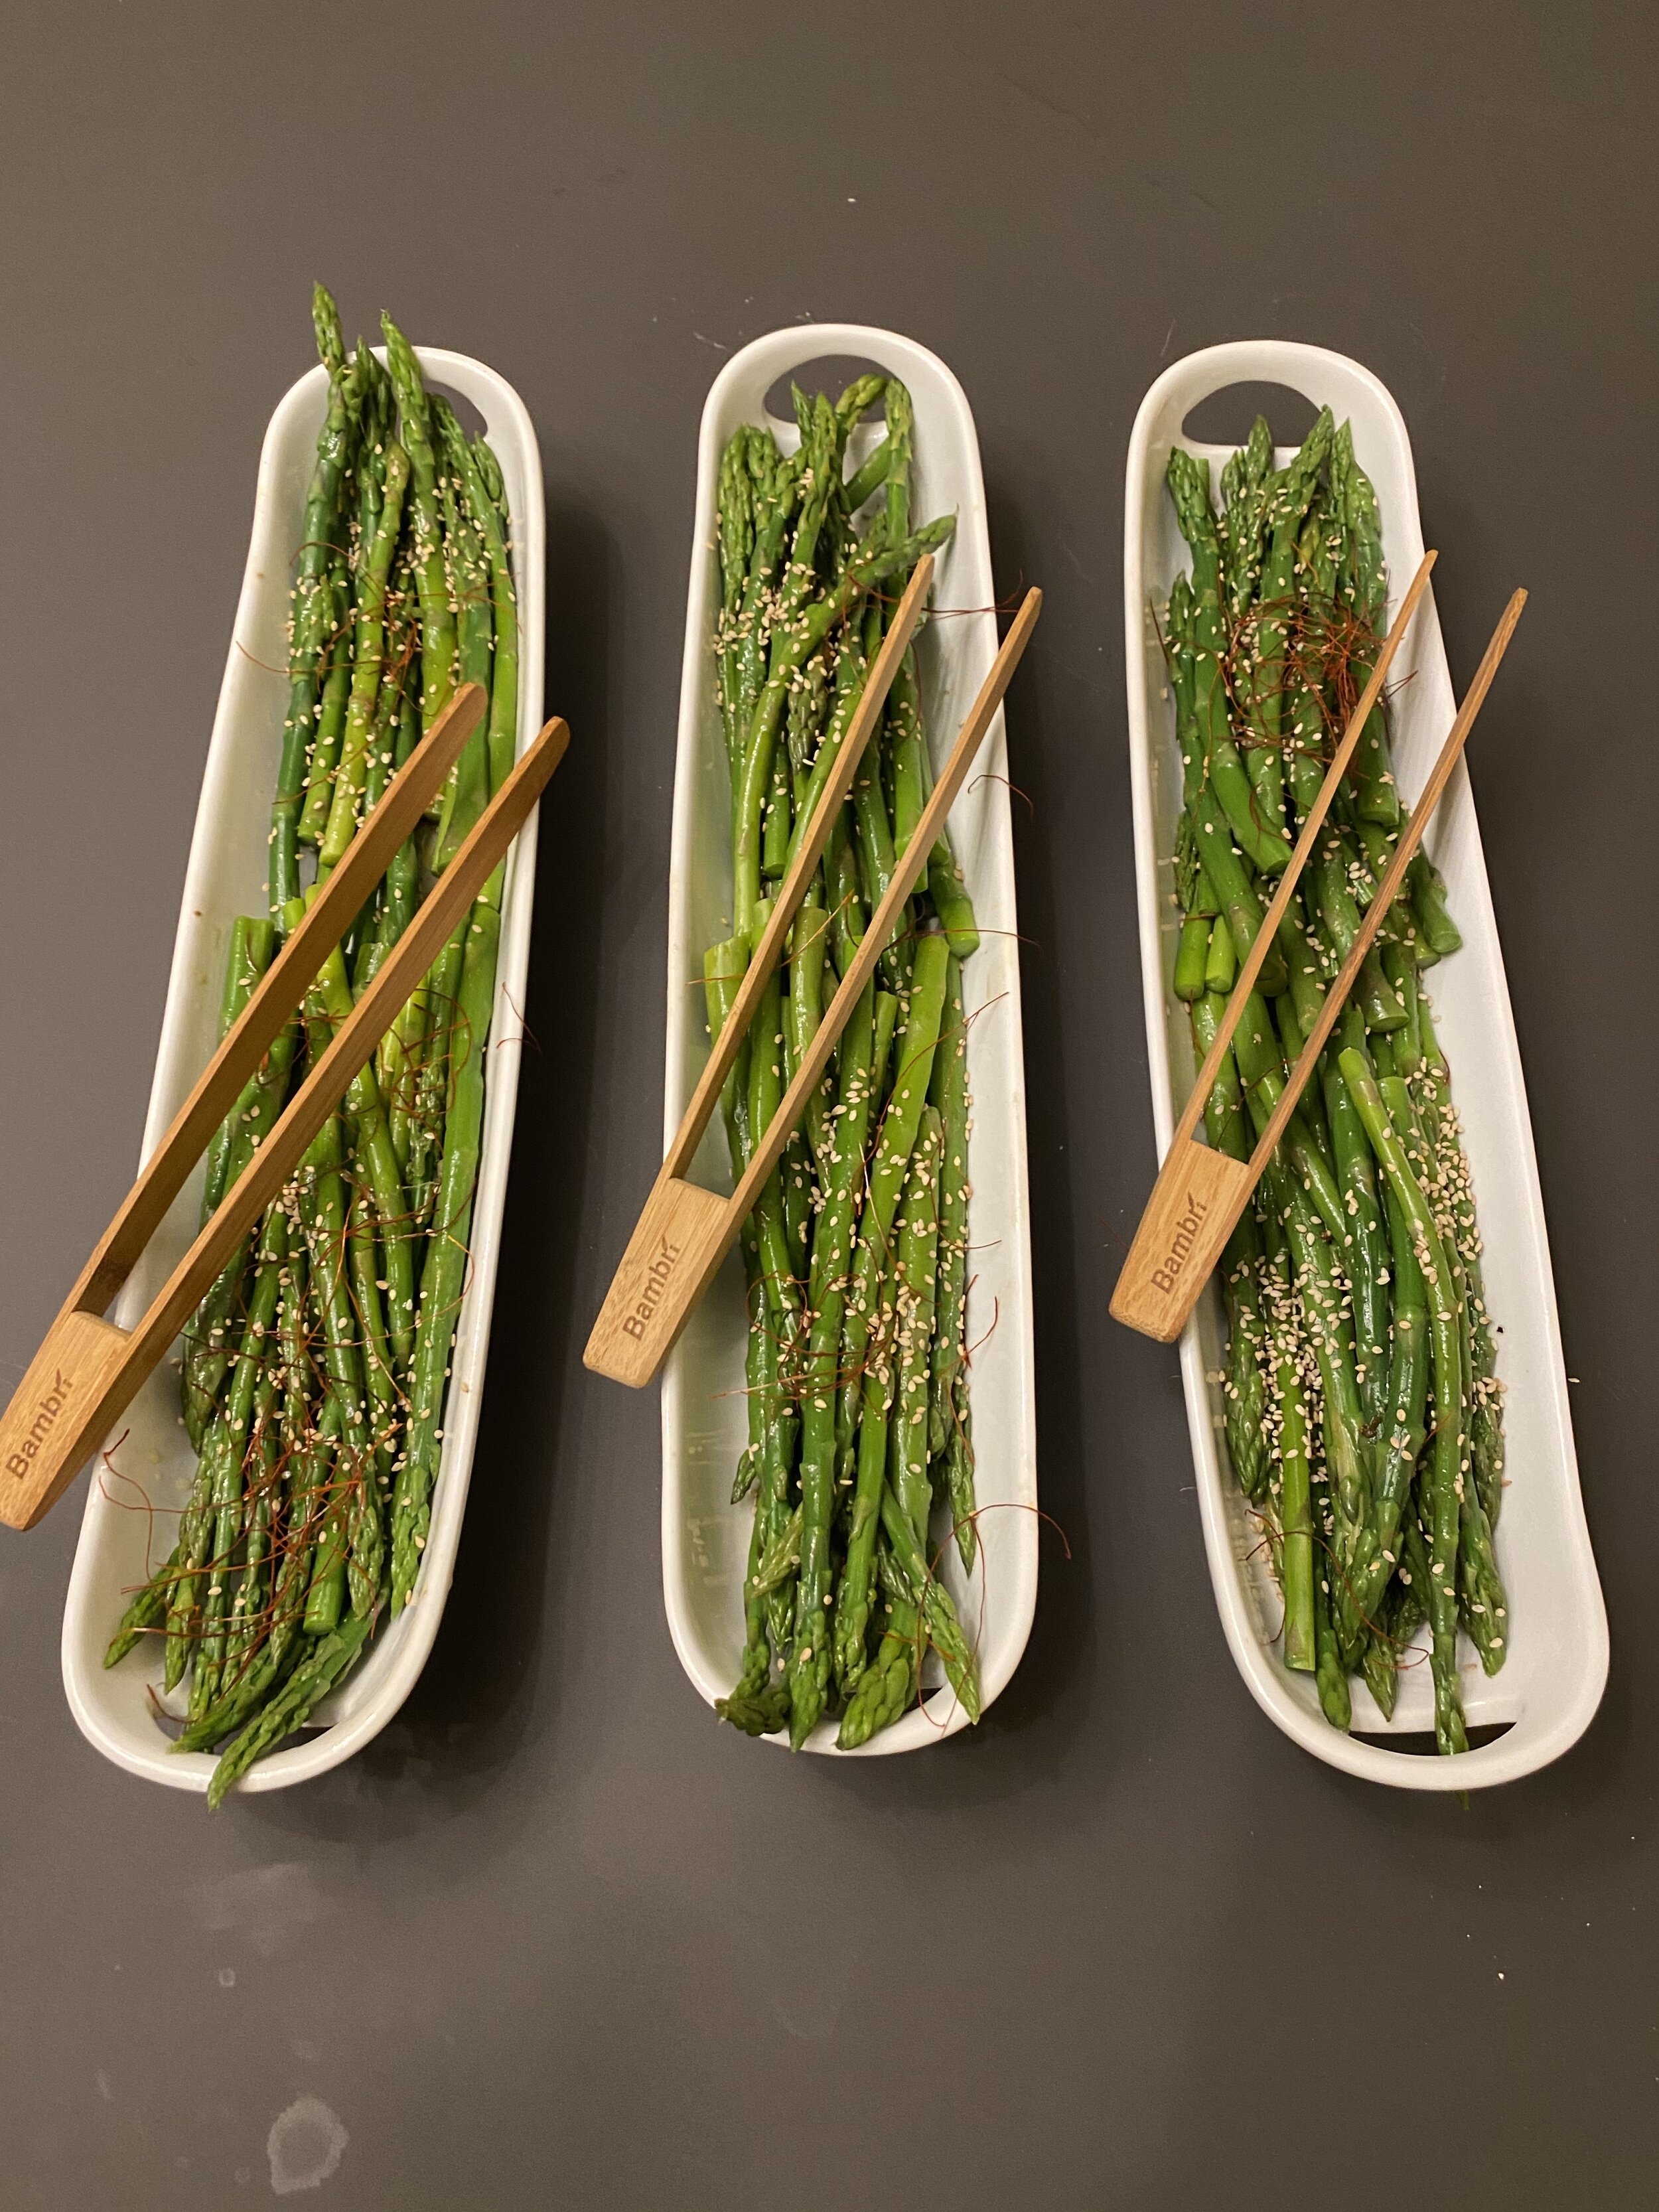 Shandong-style Asparagus